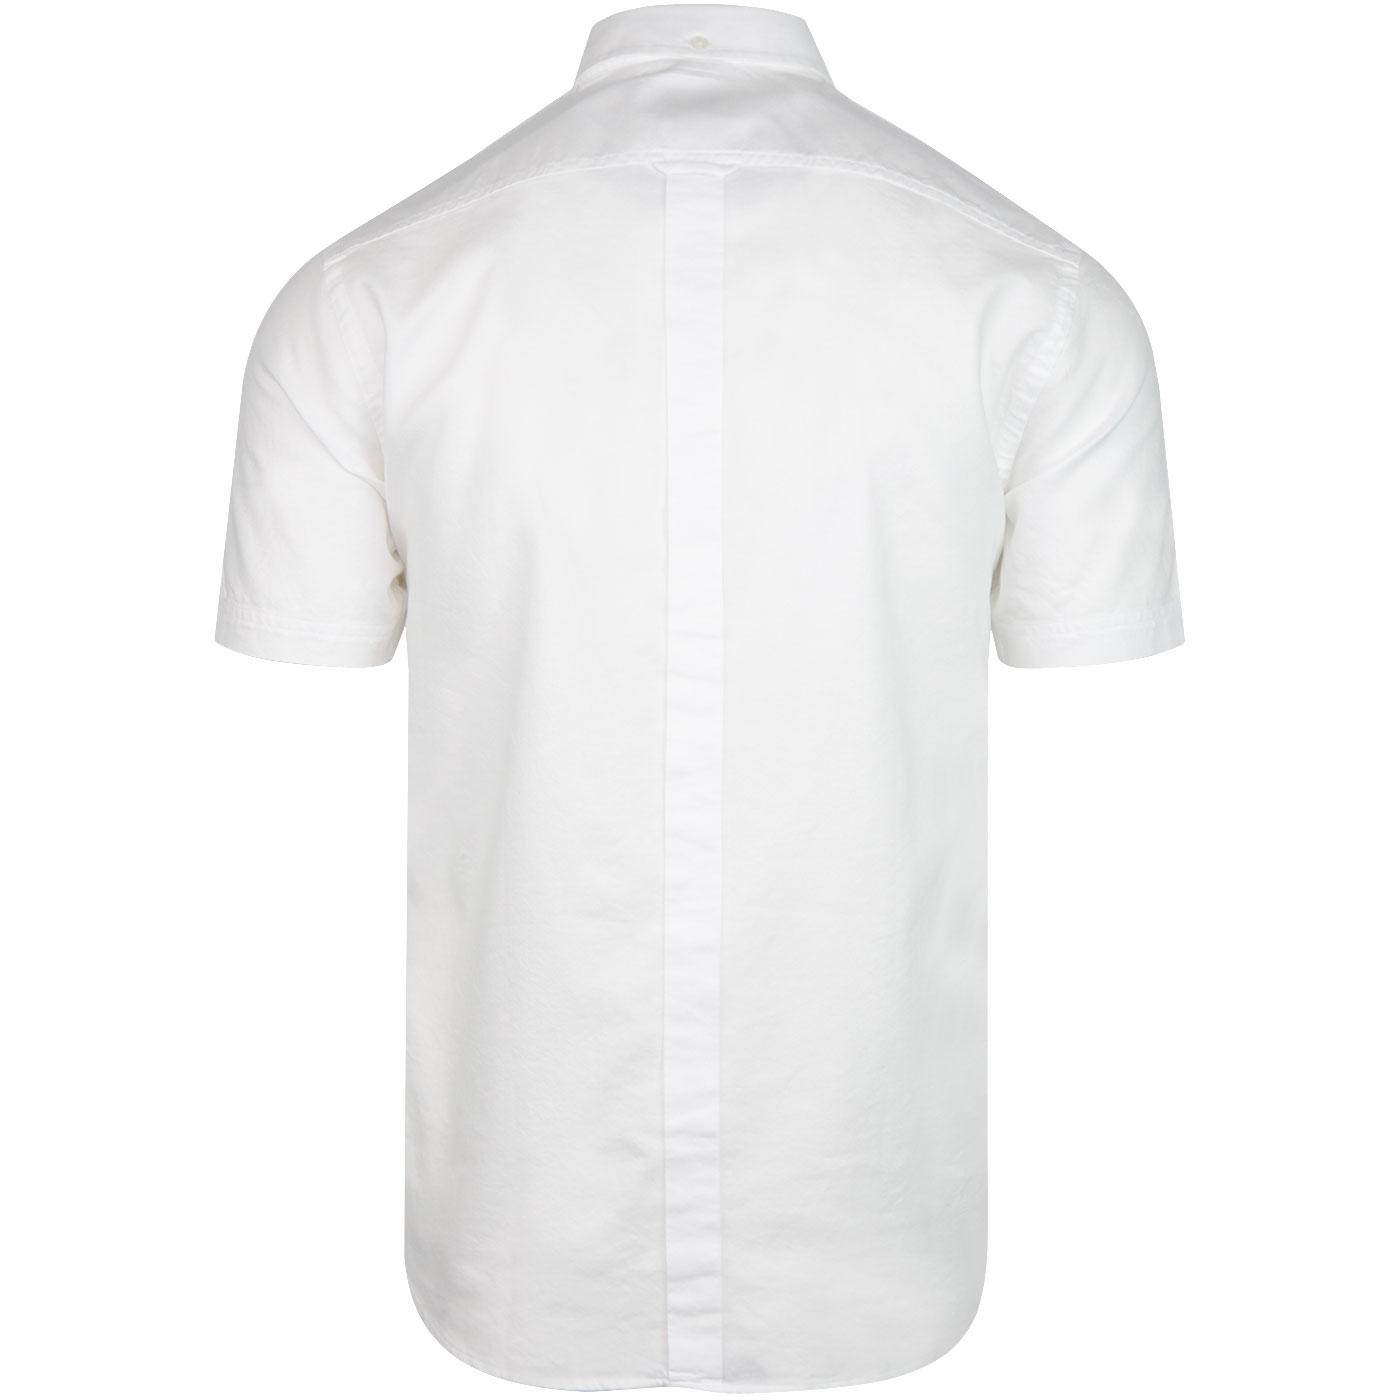 BEN SHERMAN Retro Mod Short Sleeve Oxford Shirt in White